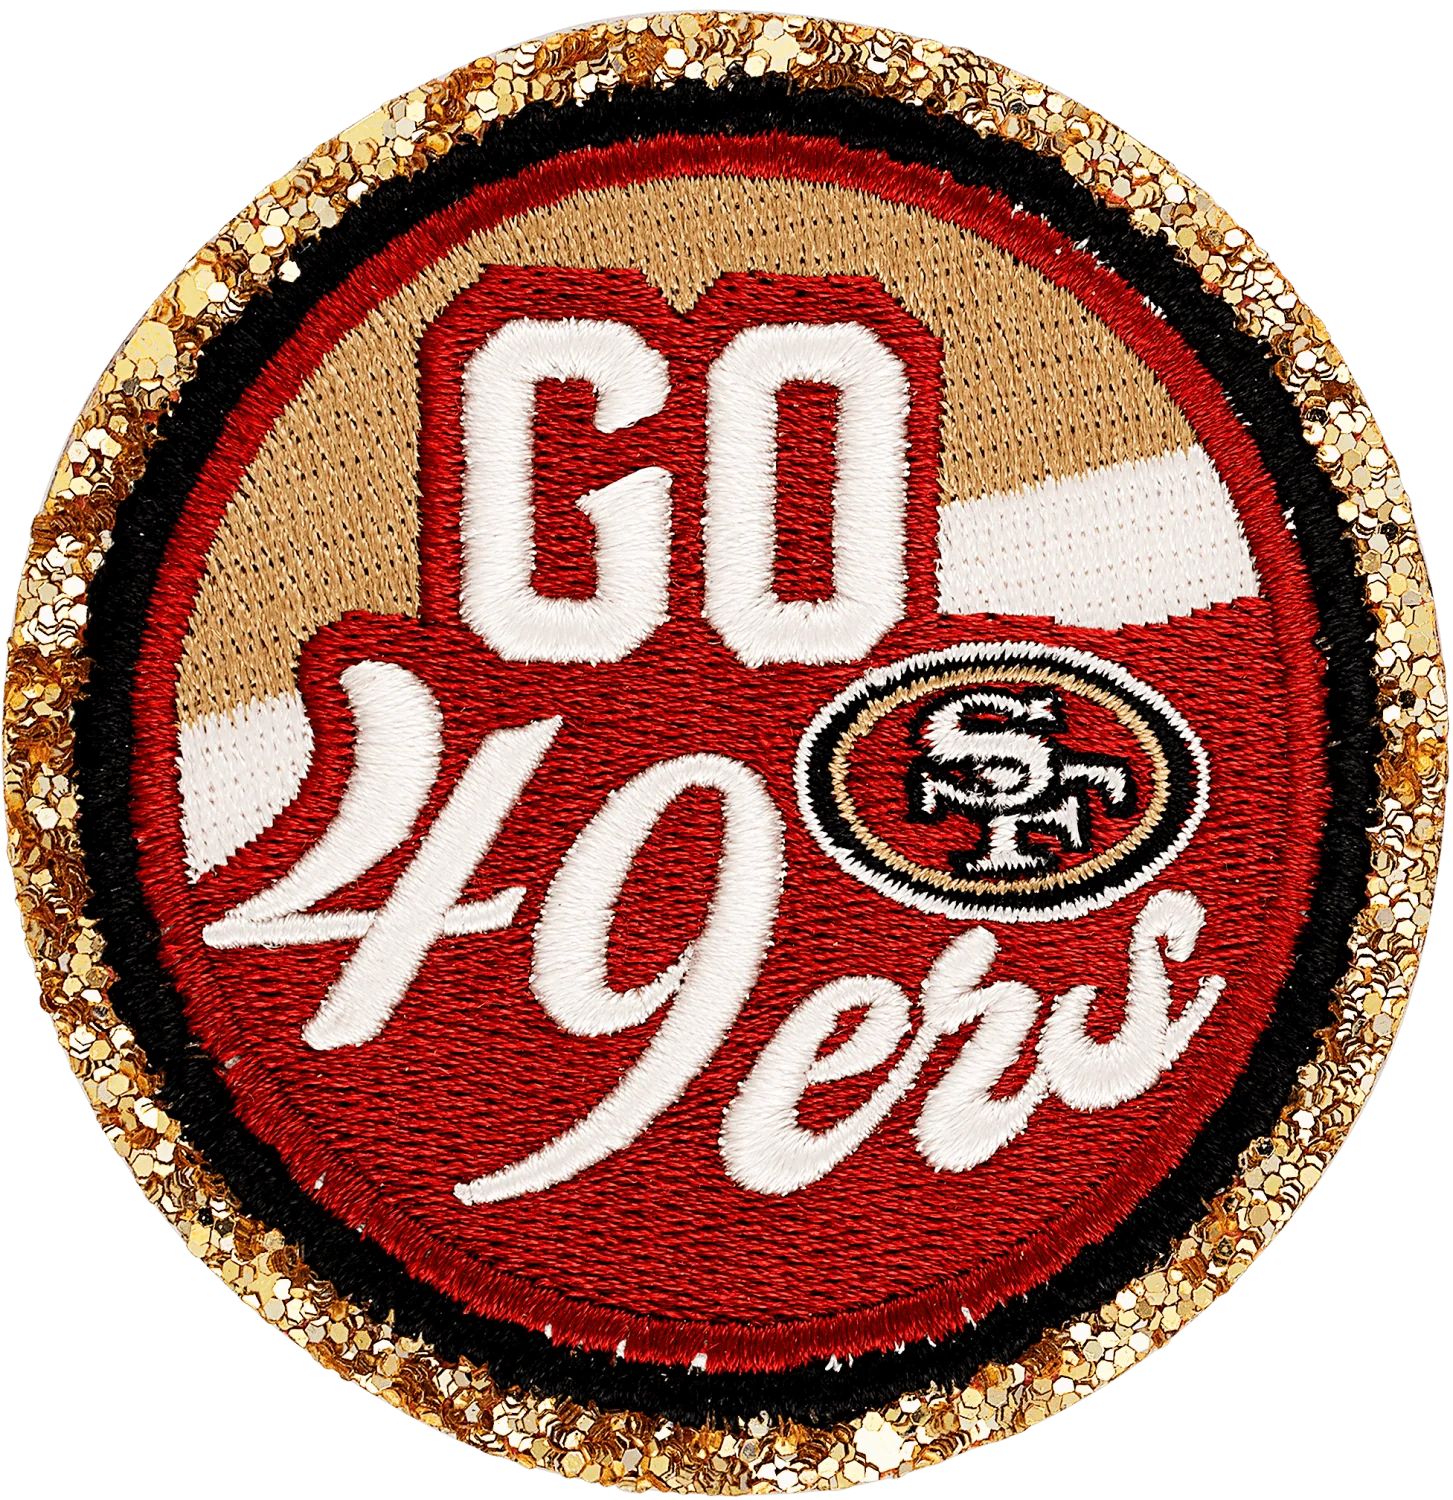 San Francisco 49ers Patch | Stoney Clover Lane